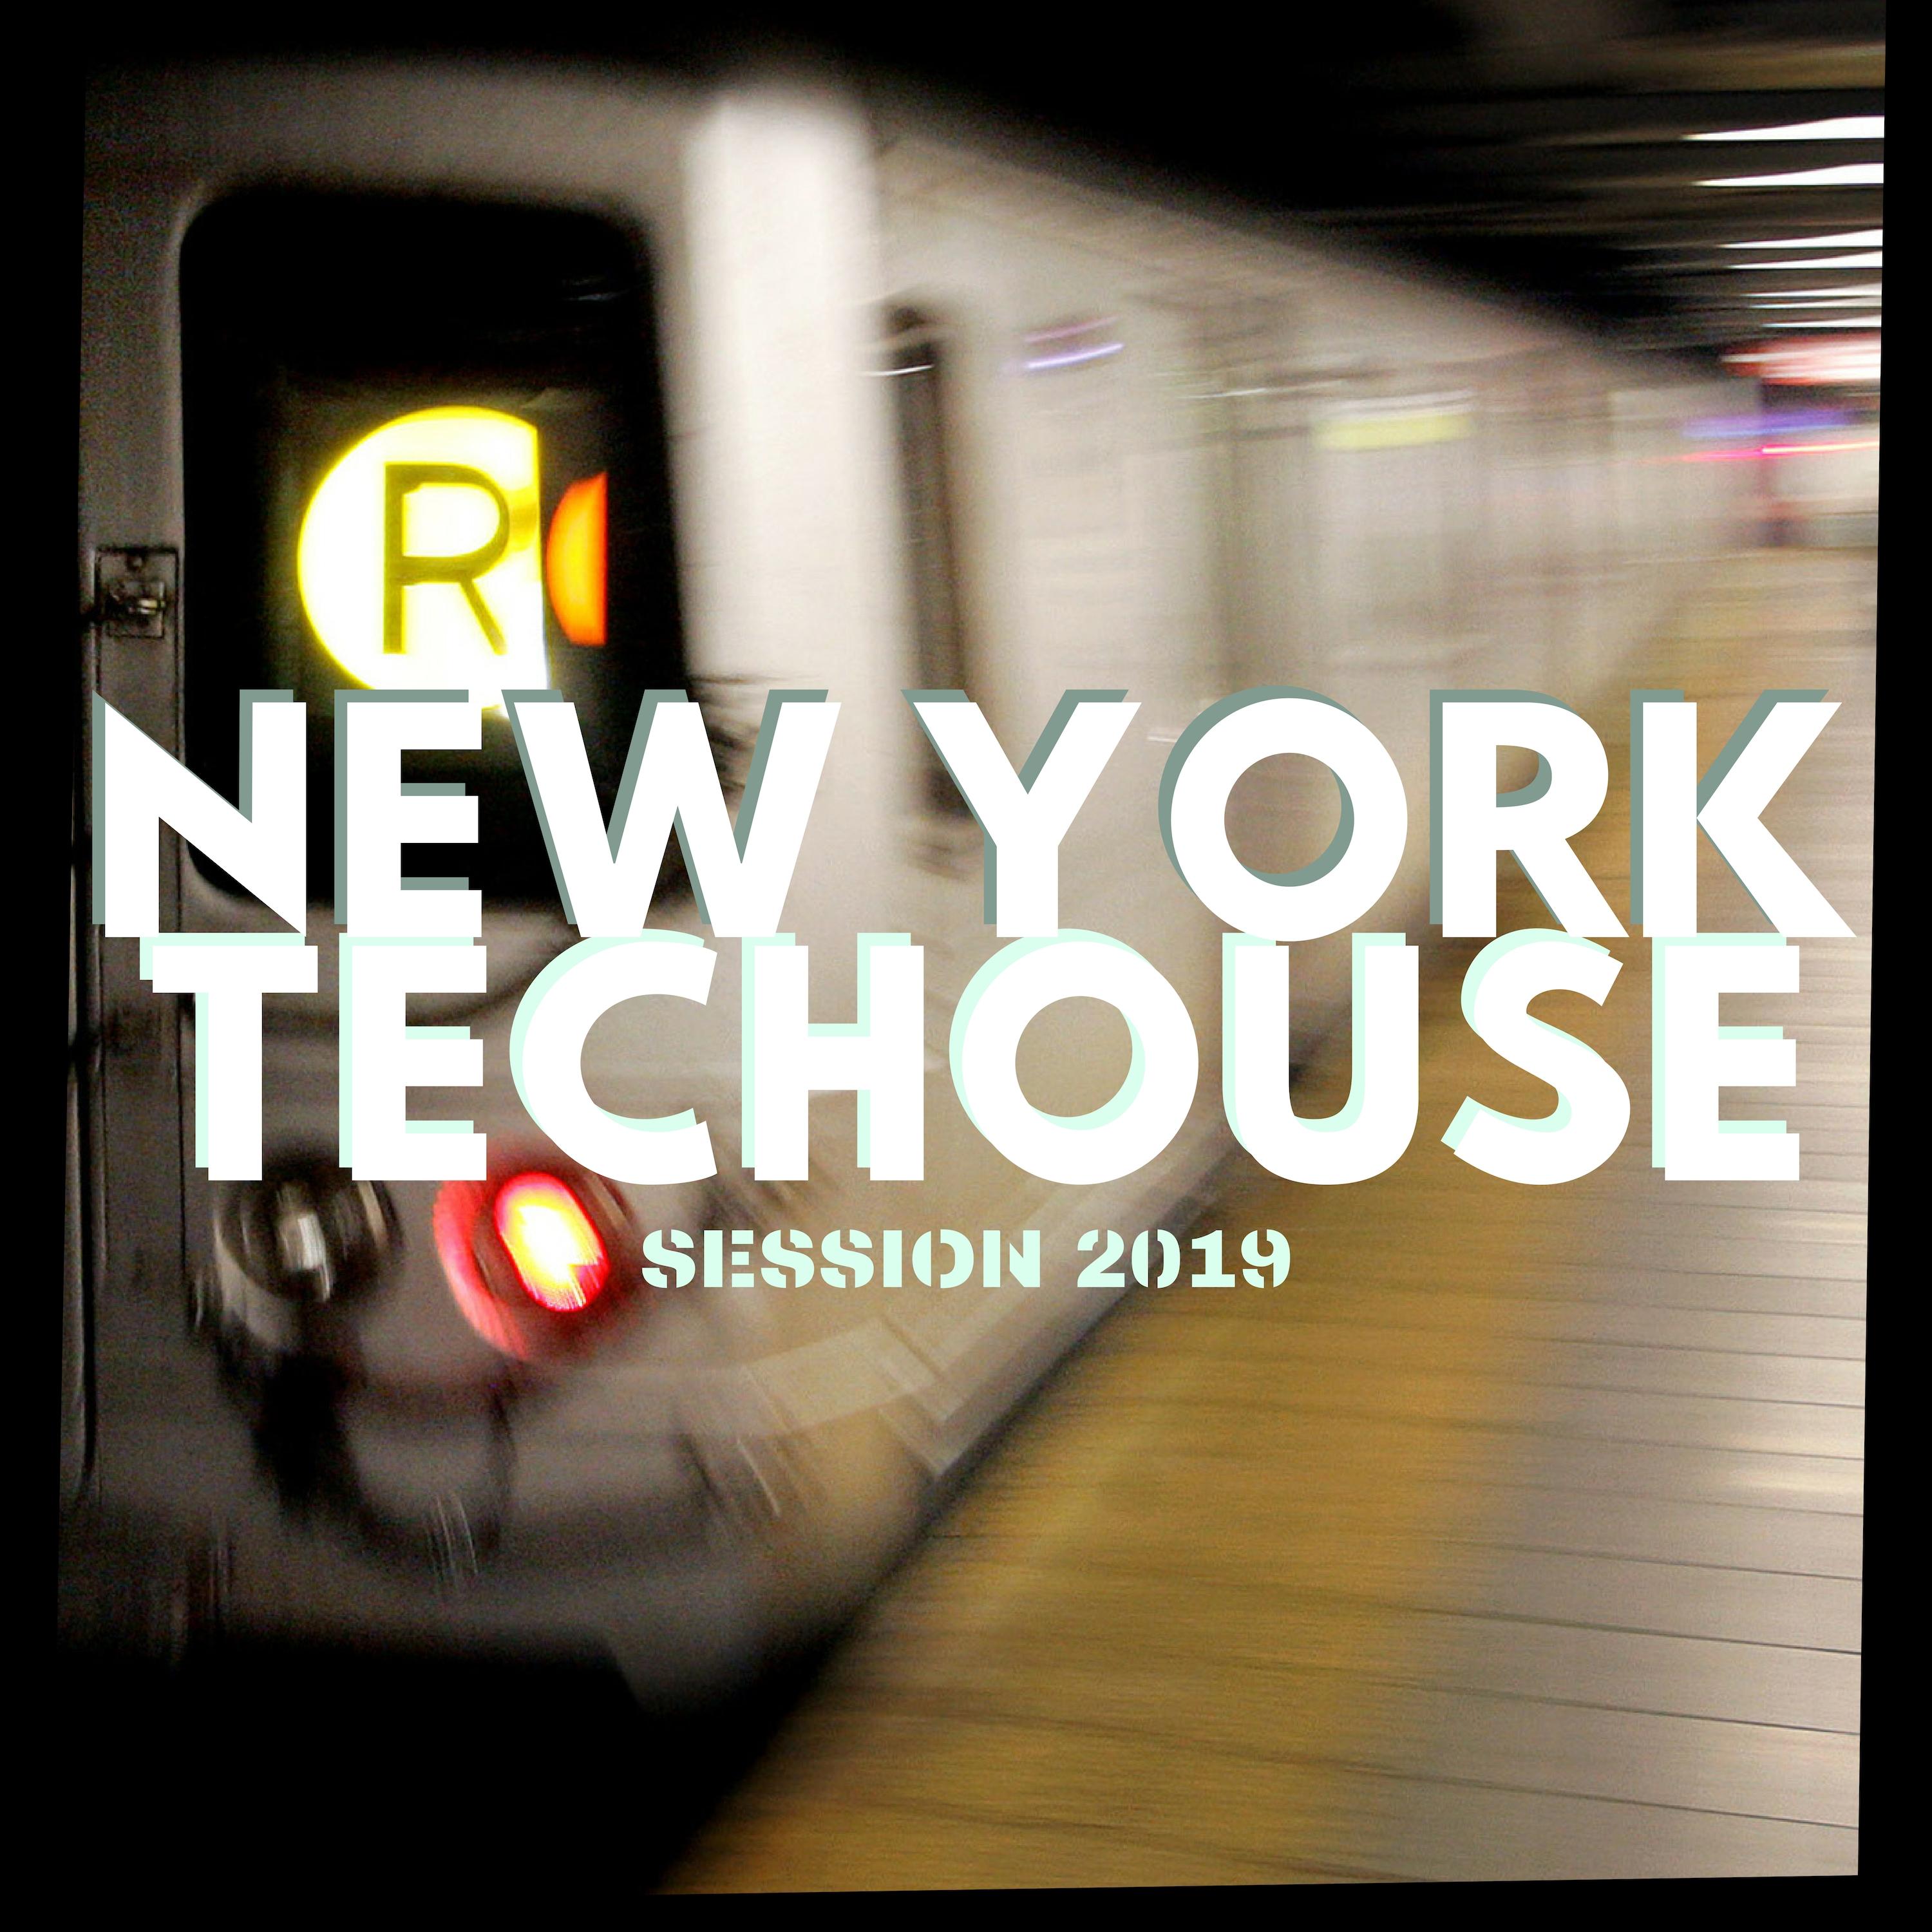 New York Techouse Session 2019